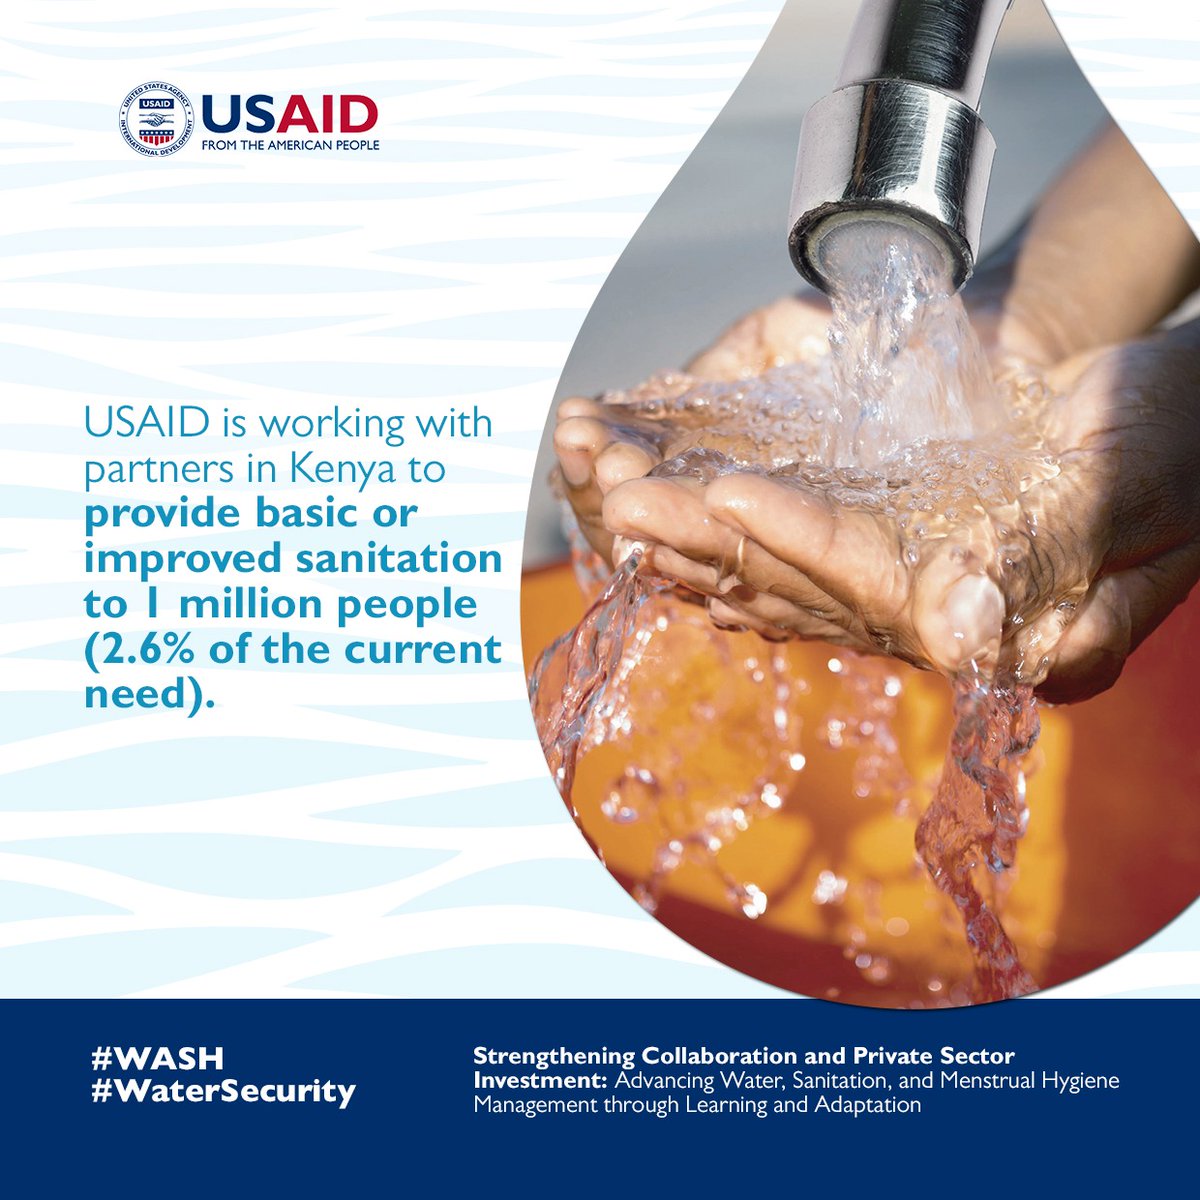 Through collaboration with county governments, @USAIDKenya improves water access for 77,208 people in northern Kenya, reducing trekking distances.
#WASHKenya @lmskenya @acdivoca @FeedtheFuture